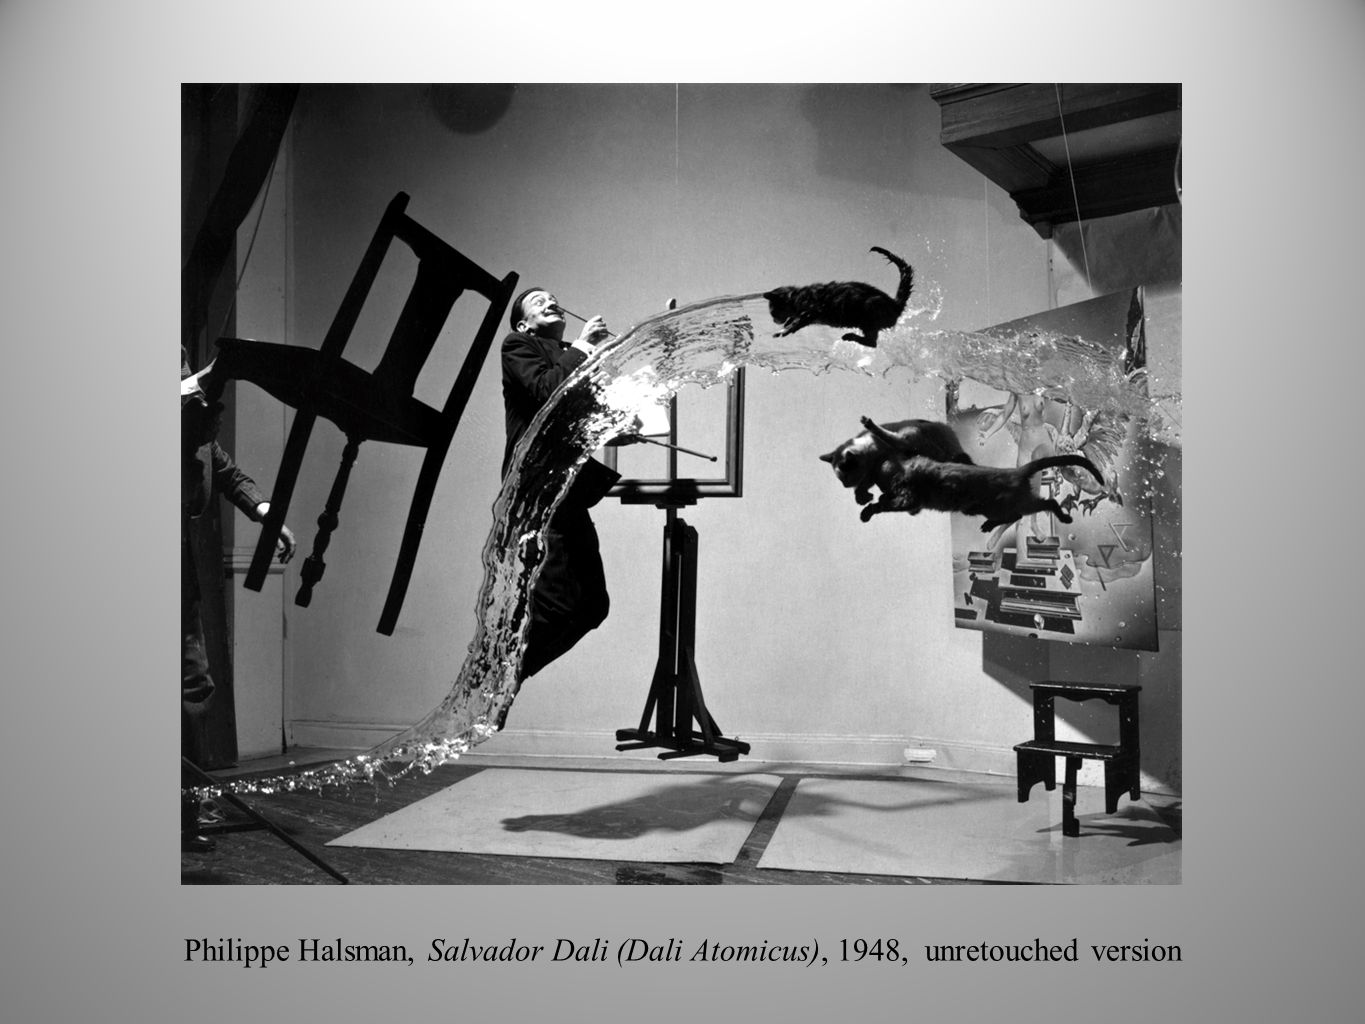 Philippe Halsman, Salvador Dali (Dali Atomicus), 1948, unretouched version